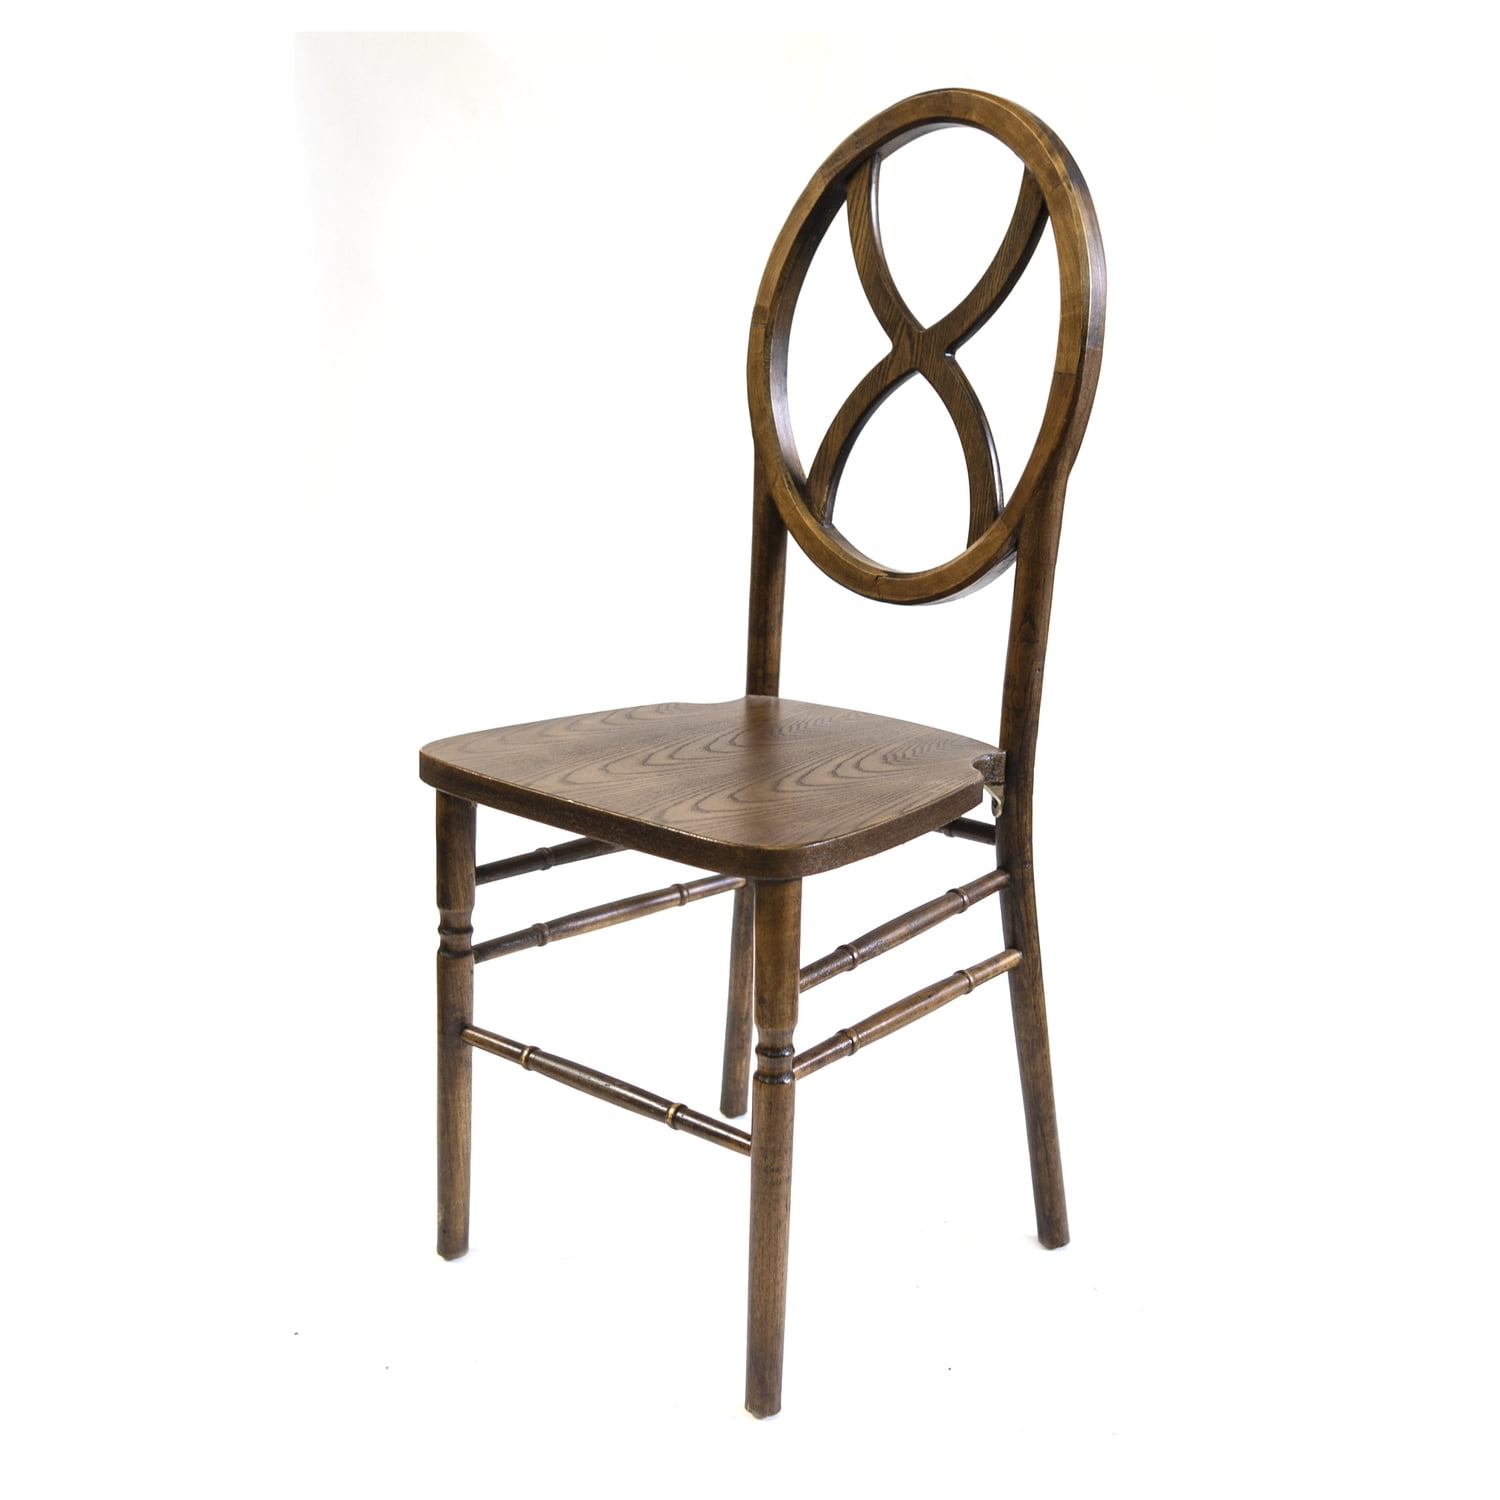 W-411-vr-sandglass-rddw-web2 Veronique Series Stackable Sandglass Dark Walnut Wood Chair, Set Of 2 - 38.75 X 16 X 16 In.